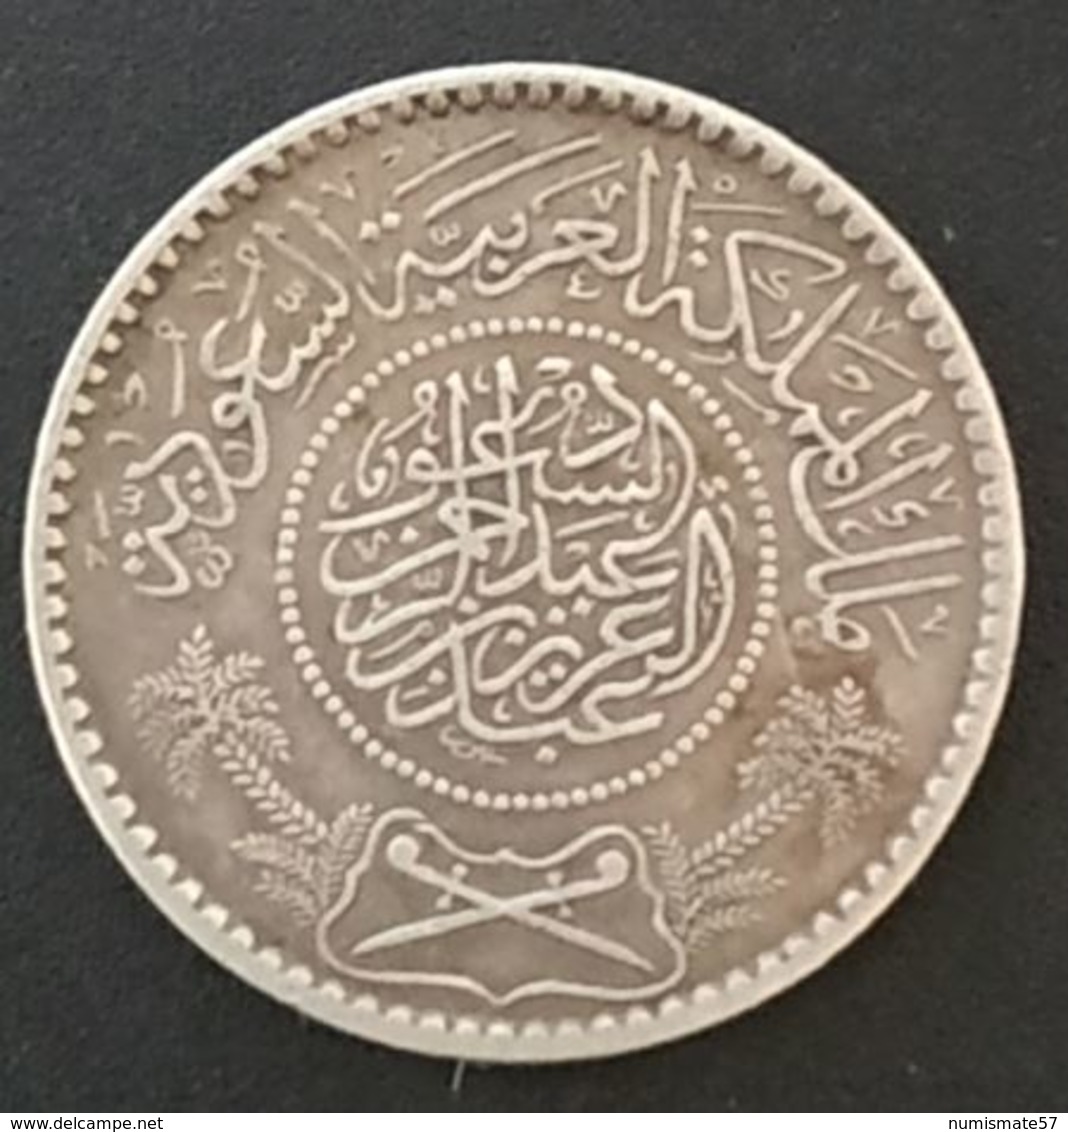 RARE - ARABIE SAOUDITE - ½ - 1/2 RIYAL 1935 ( 1354 ) - Abd Al-Aziz Bin Sa'ud - KM 17 - Argent - Silver -  Saudi Arabia - Arabie Saoudite